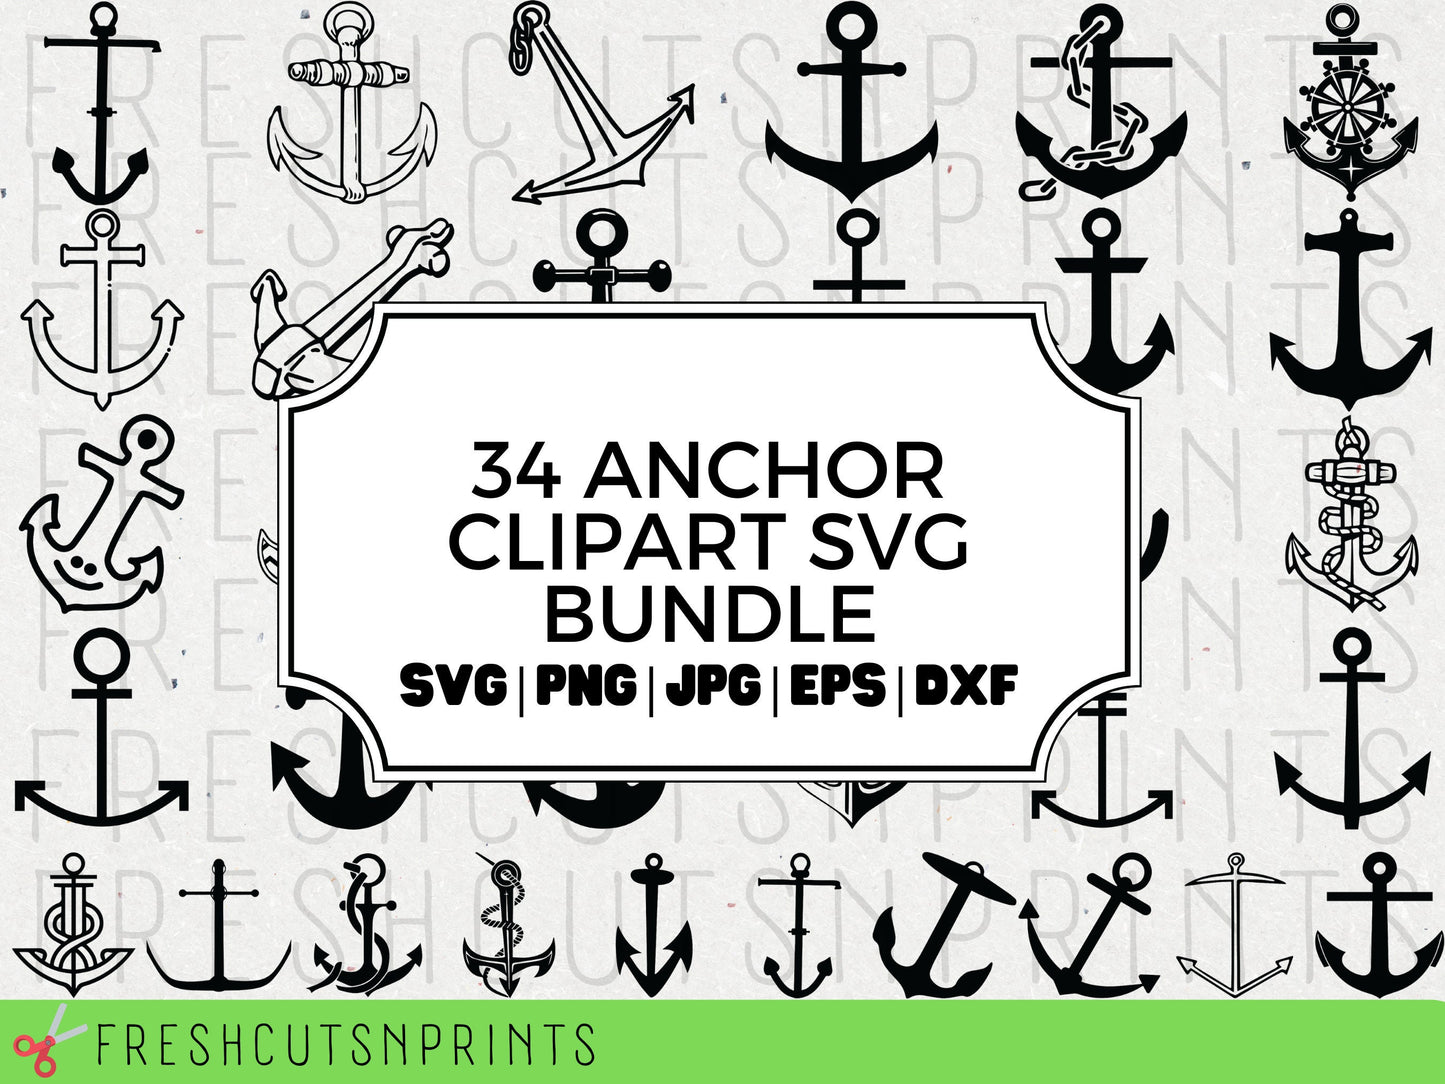 34 Anchor SVG Bundle , Anchor Clipart, Anchor Cut File, Anchor Silhouette, Anchor Decal, Anchor Vector, Naval svg, Anchor DXF, Naval clipart